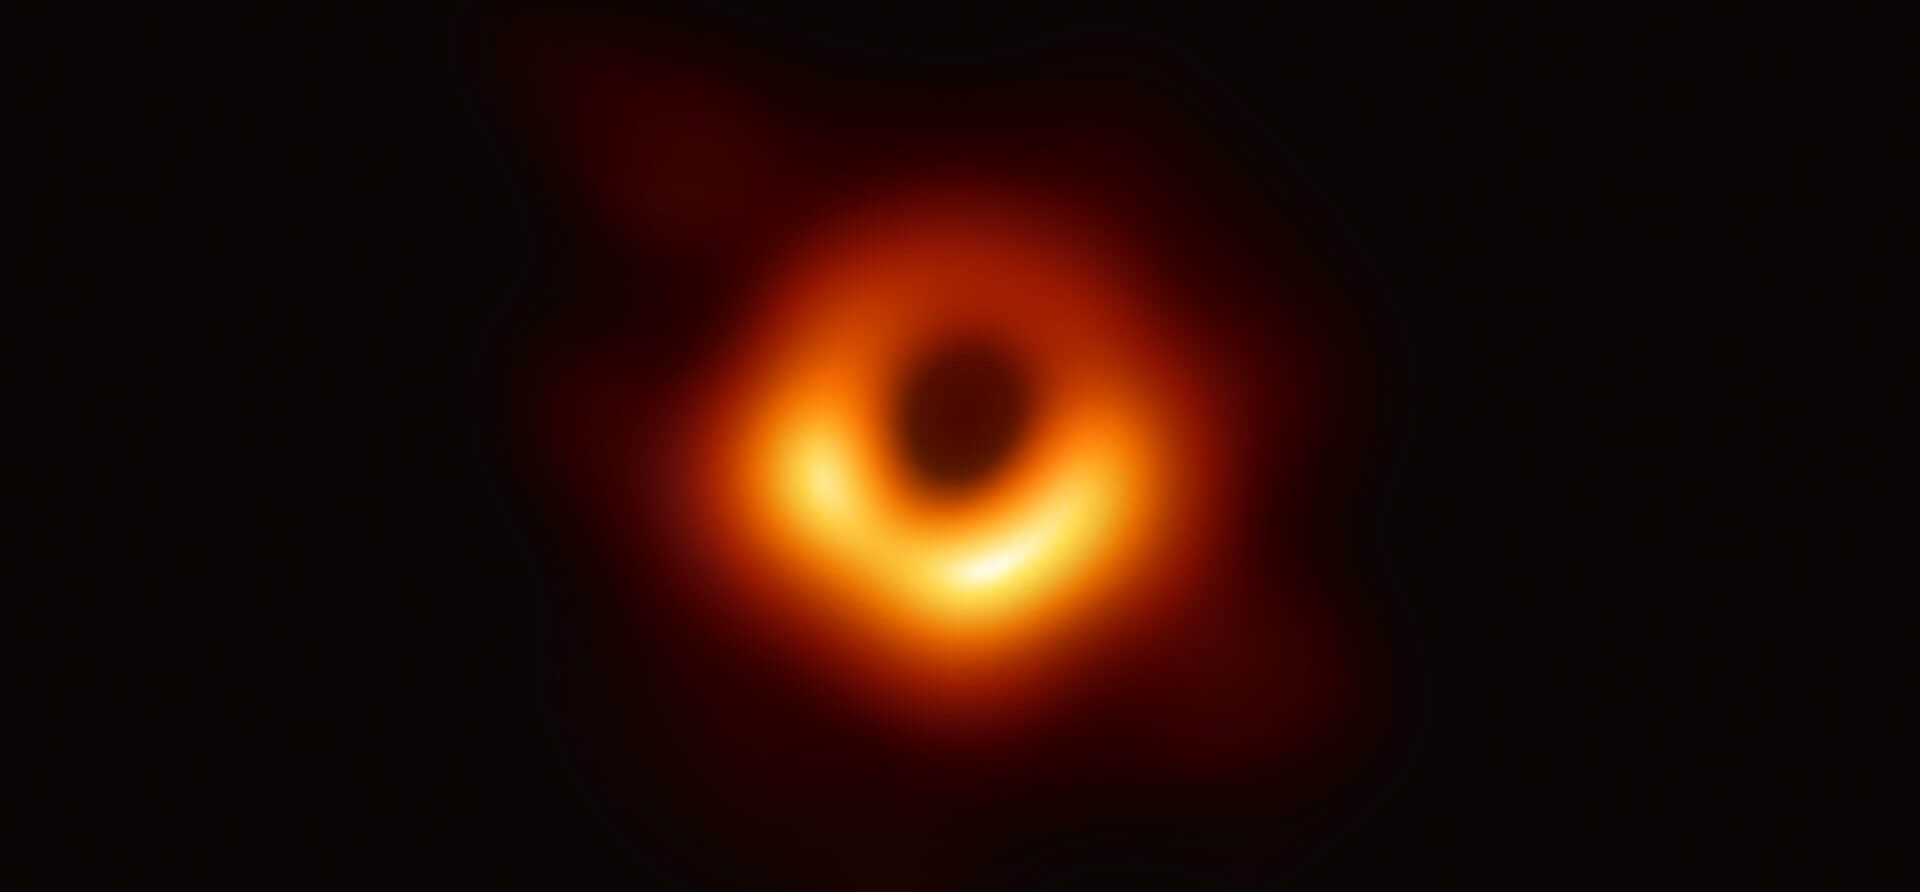 An Inspiring Look: The Black Hole Illuminated